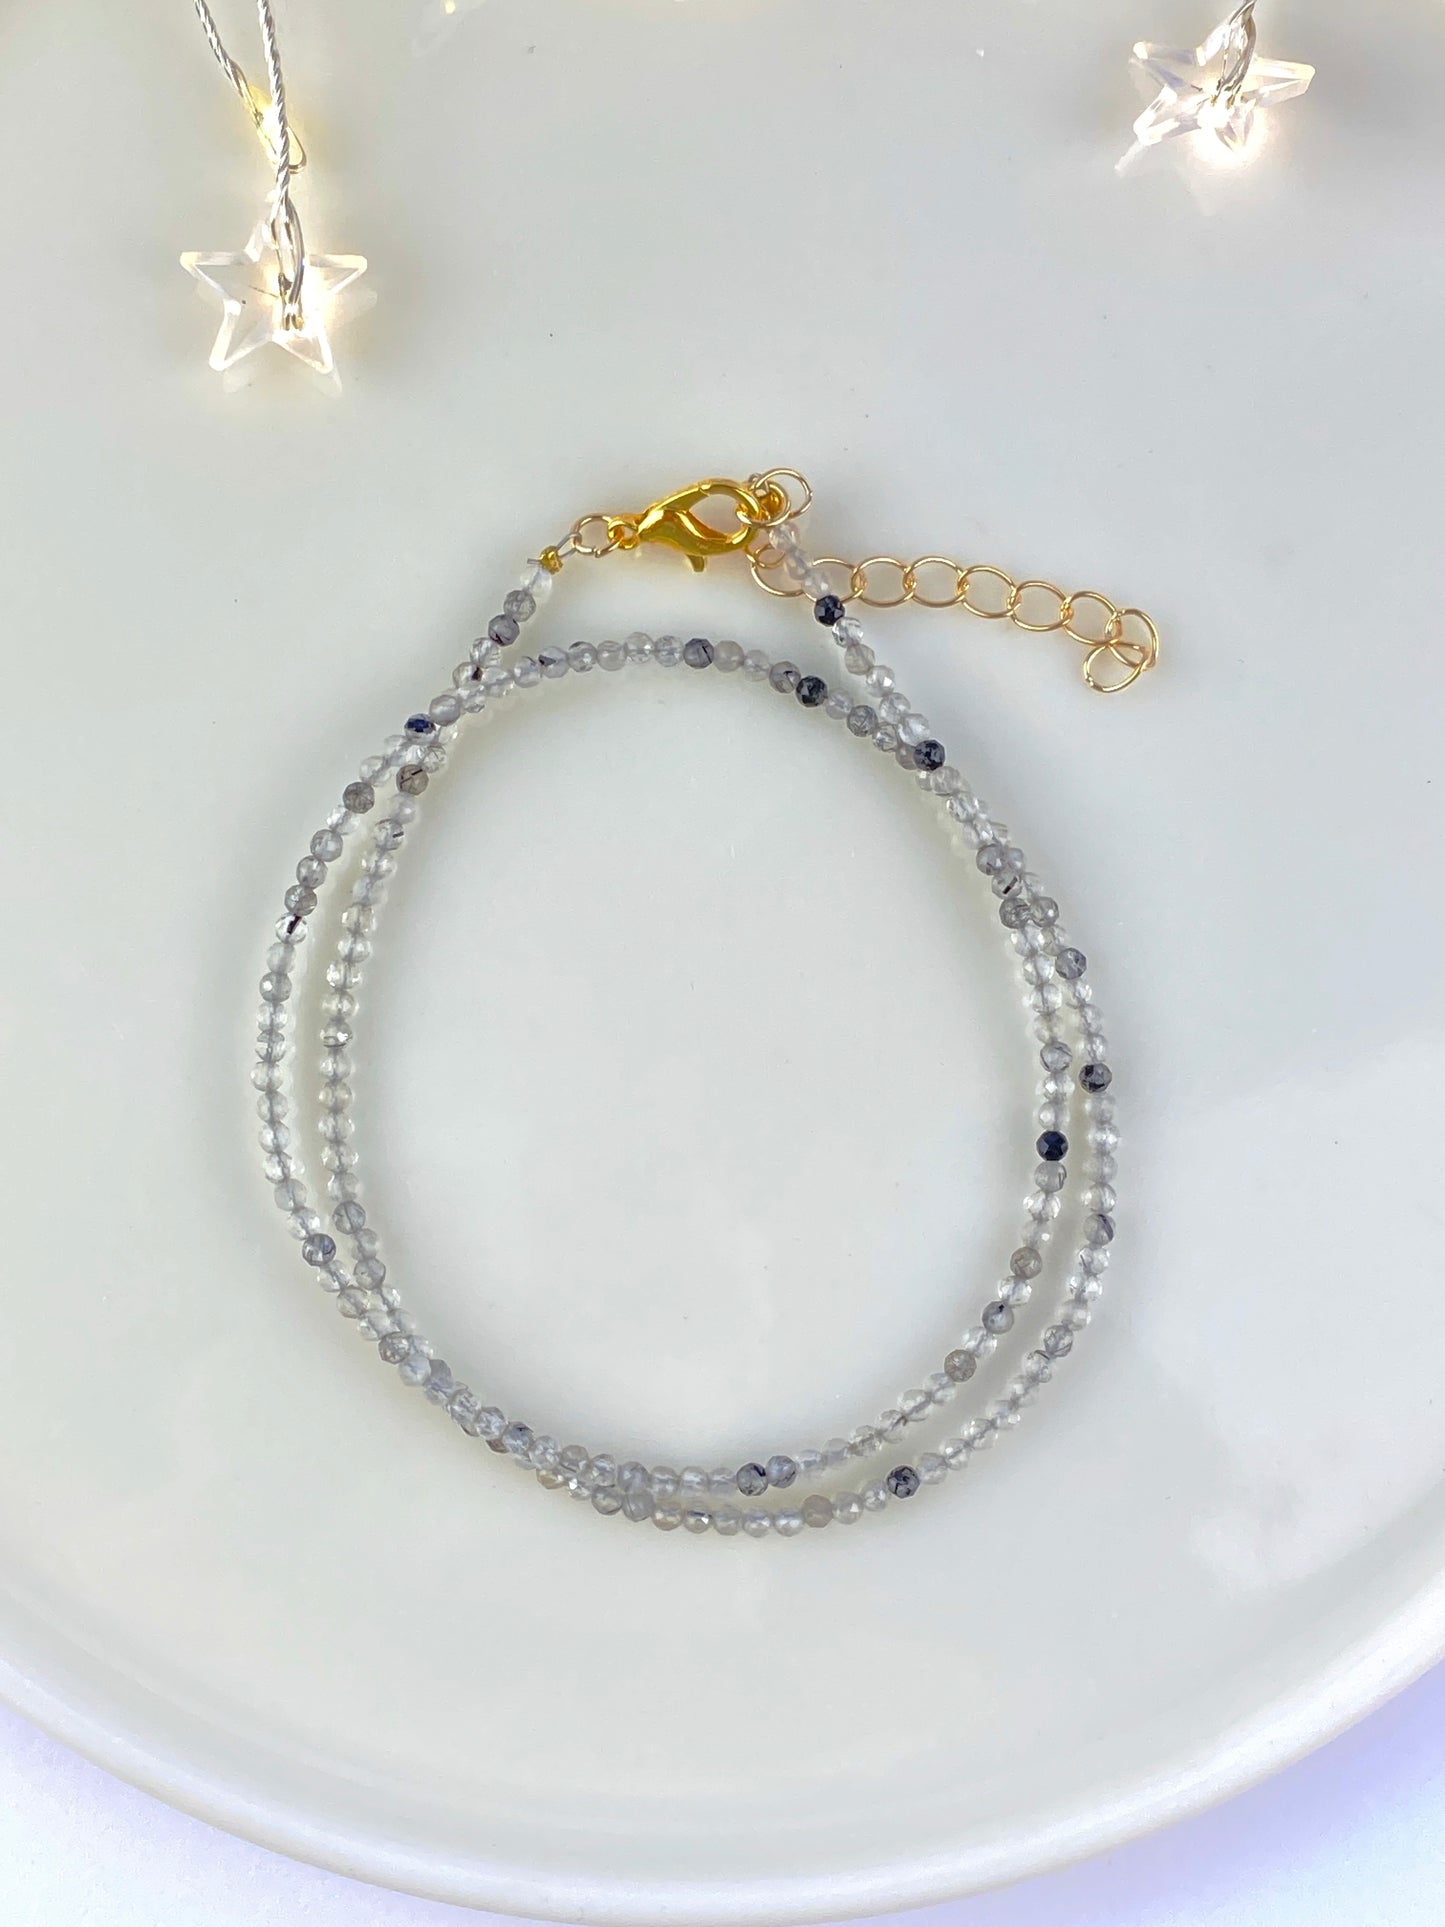 Black Tourmaline Crystal Necklace, Mini bead necklace.